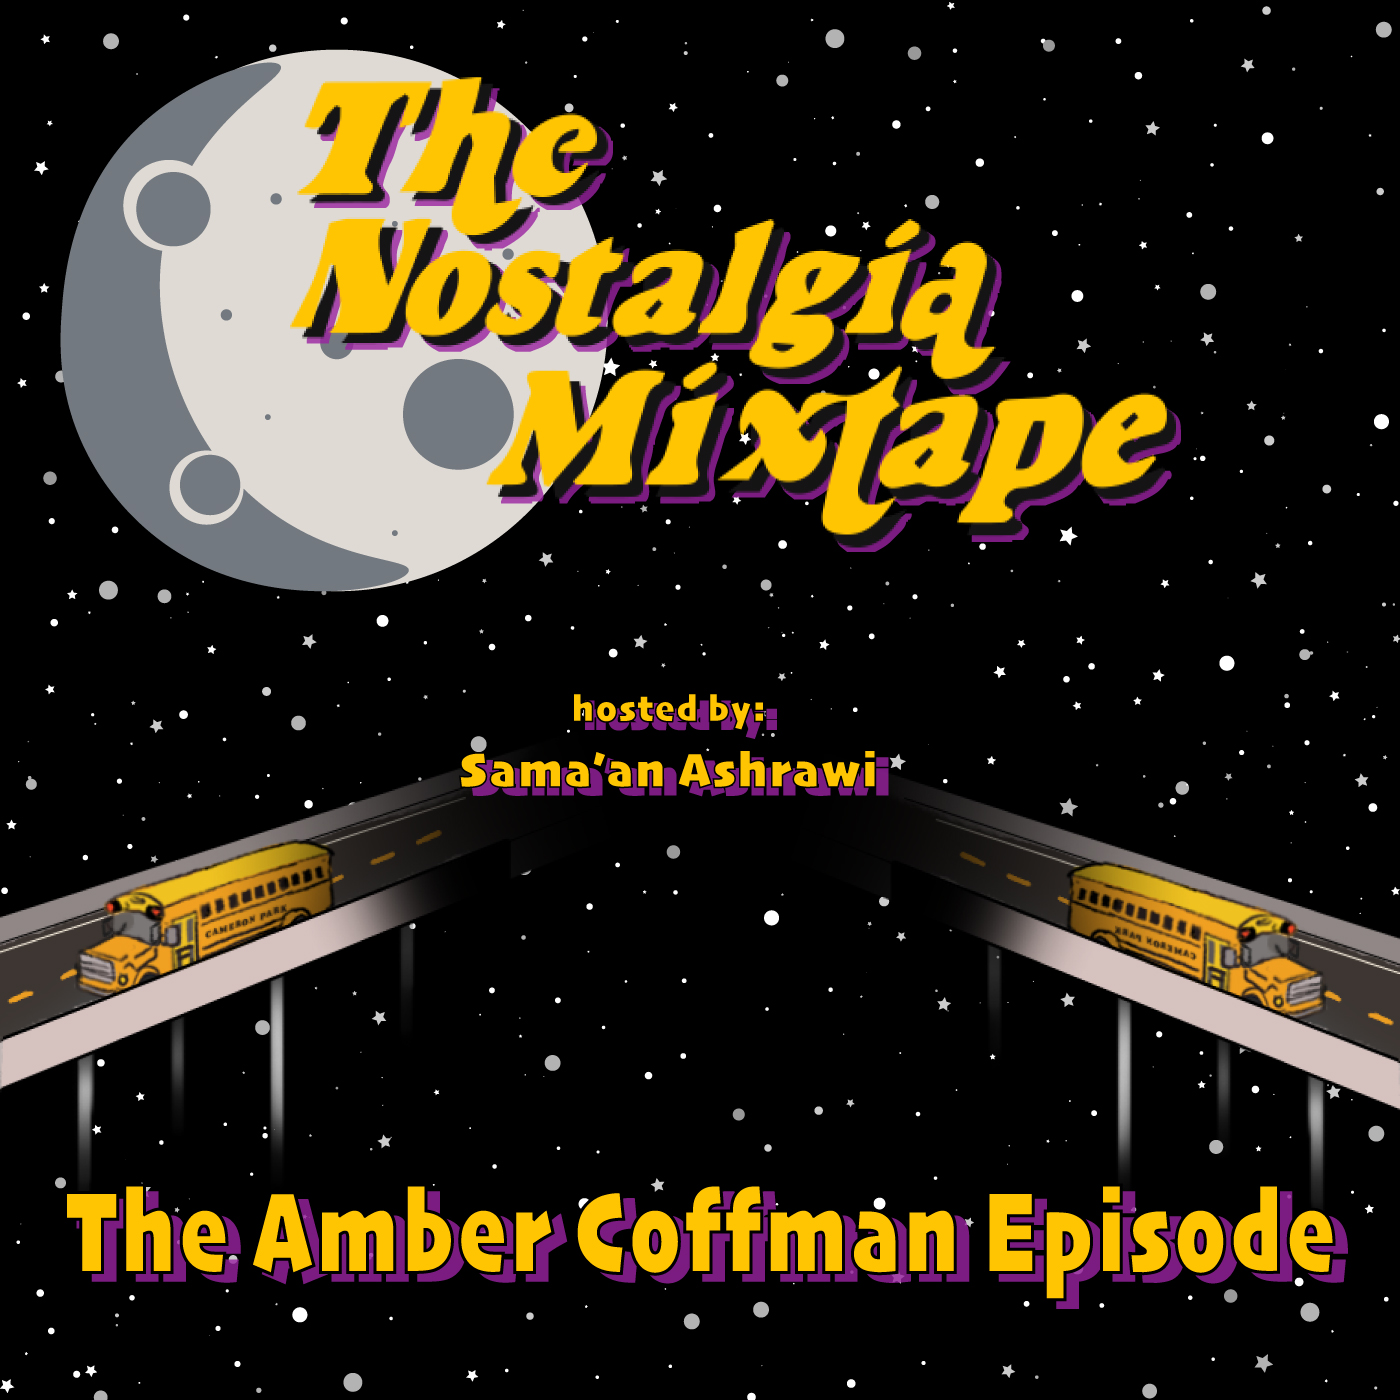 Amber Coffman's Nostalgia Mixtape. Hosted by Sama'an Ashrawi.